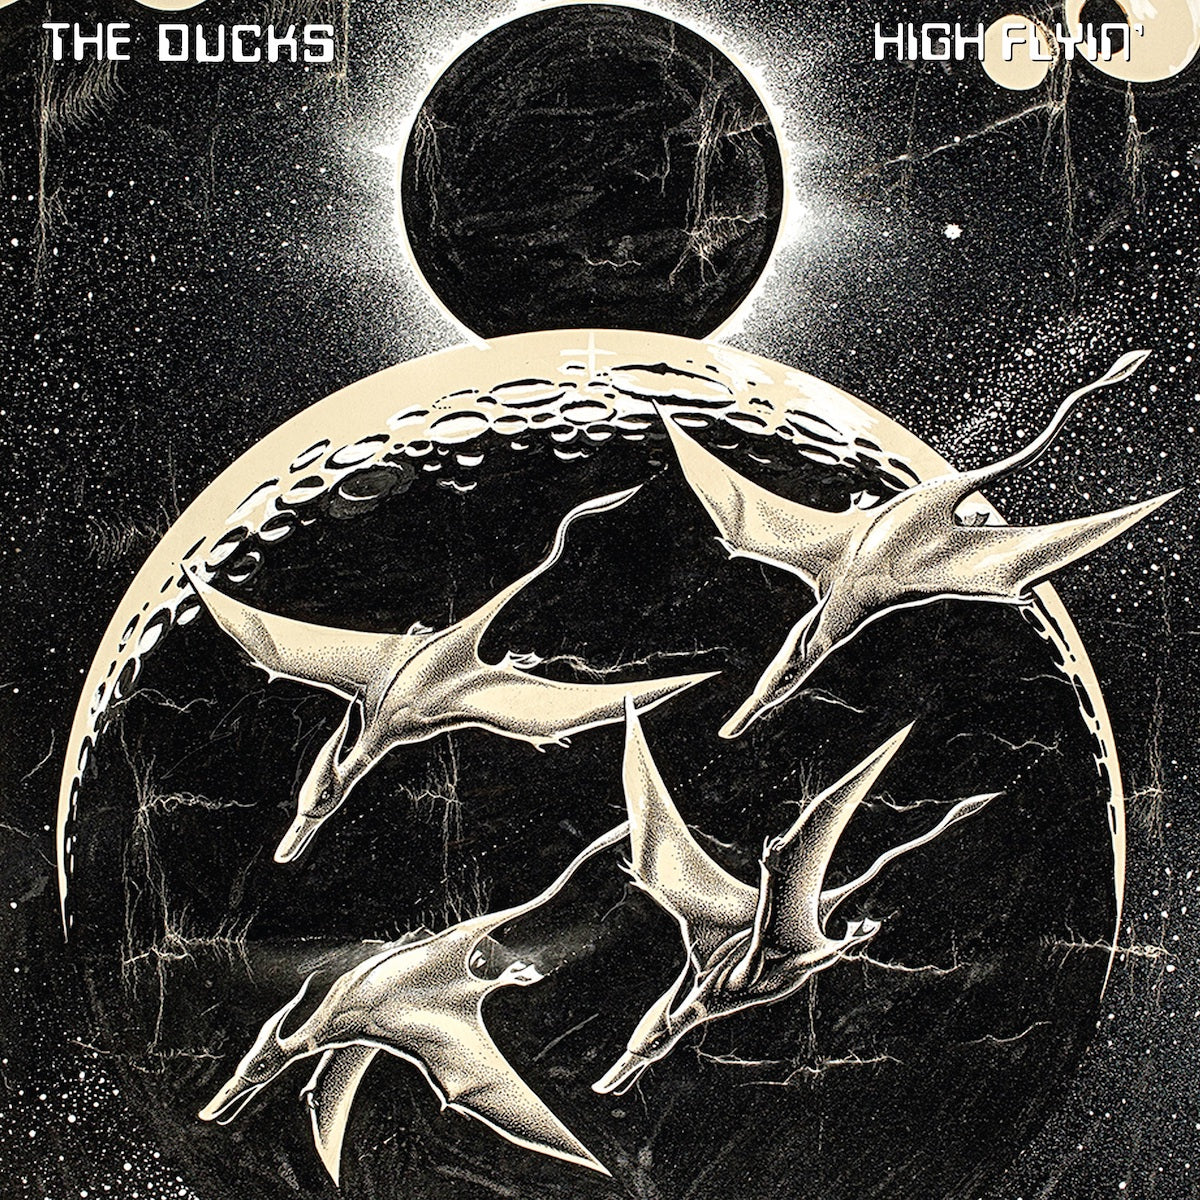 Ducks, The (Neil Young) "High Flyin'" 3LP